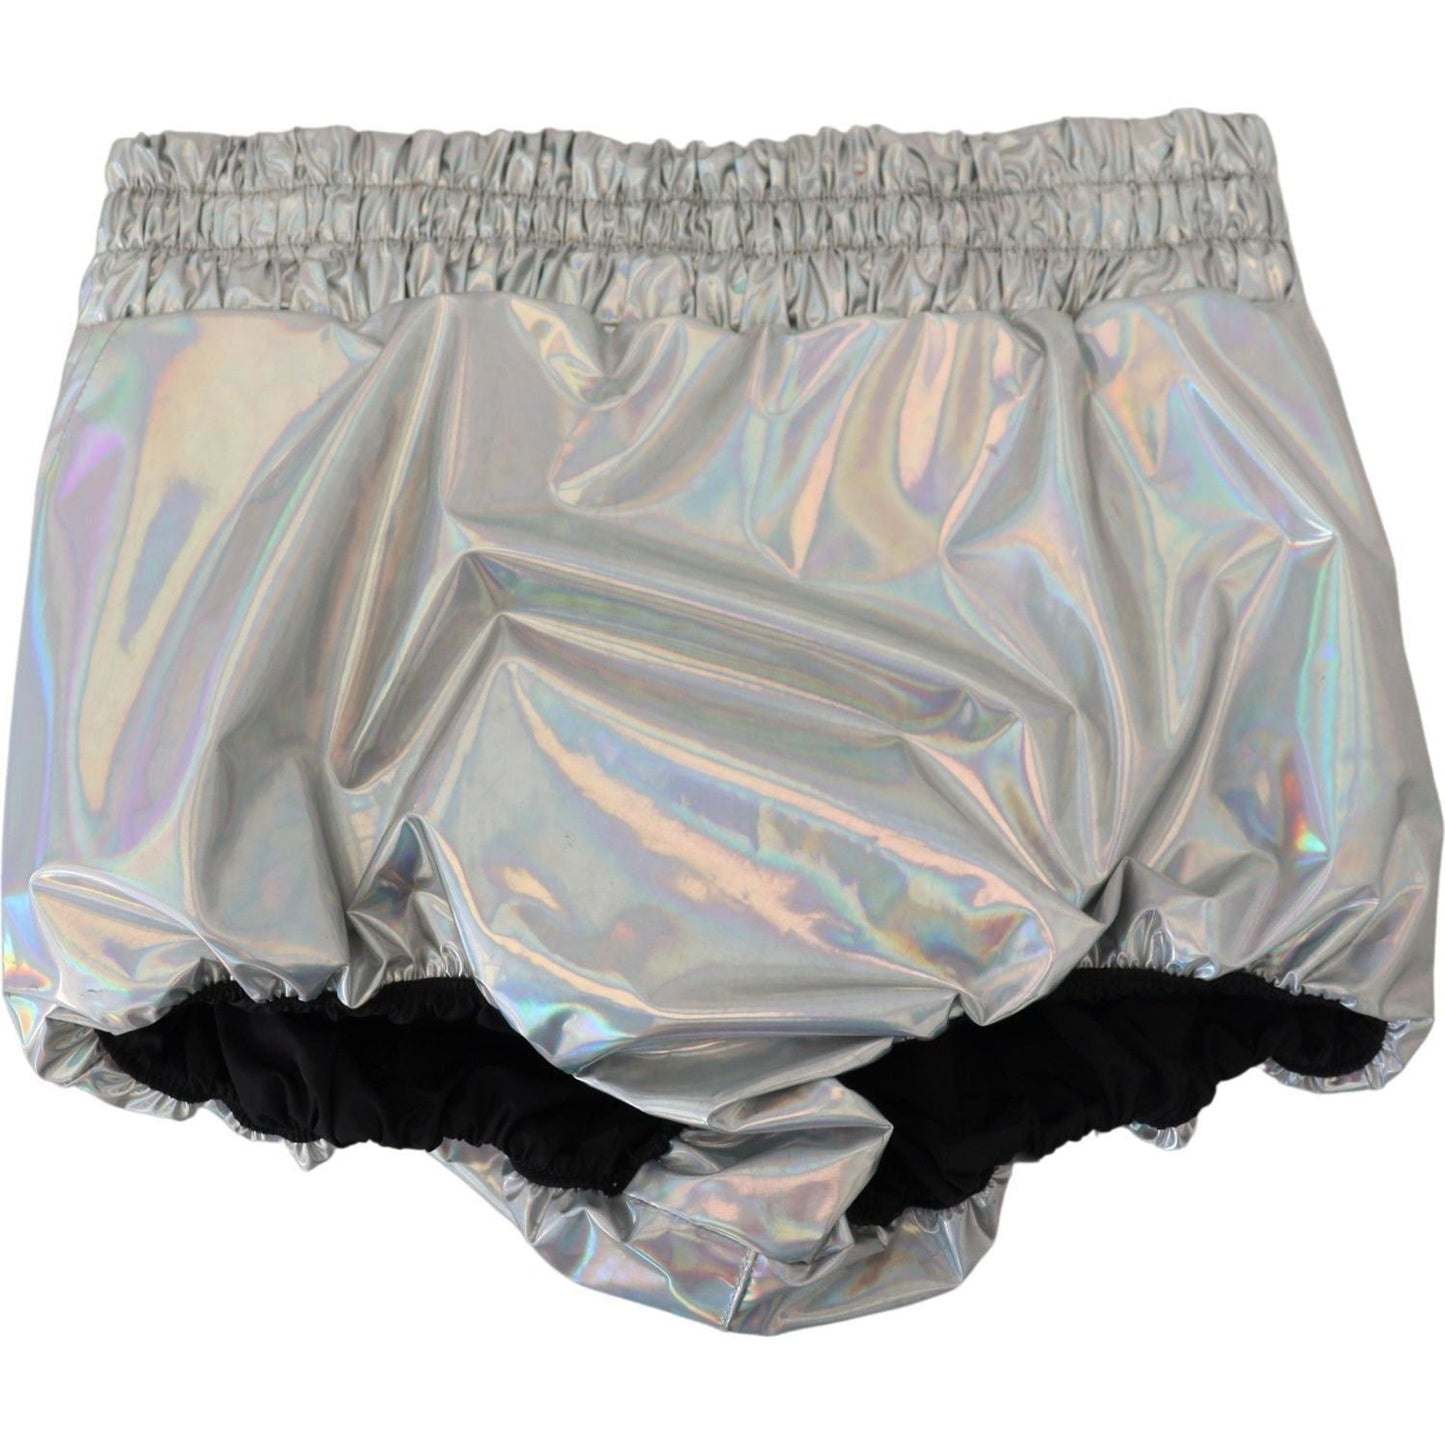 Dolce & Gabbana Elevated Elegance Silver High Waist Shorts silver-holographic-high-waist-hot-pants-shorts IMG_7448-8a179b8a-431.jpg